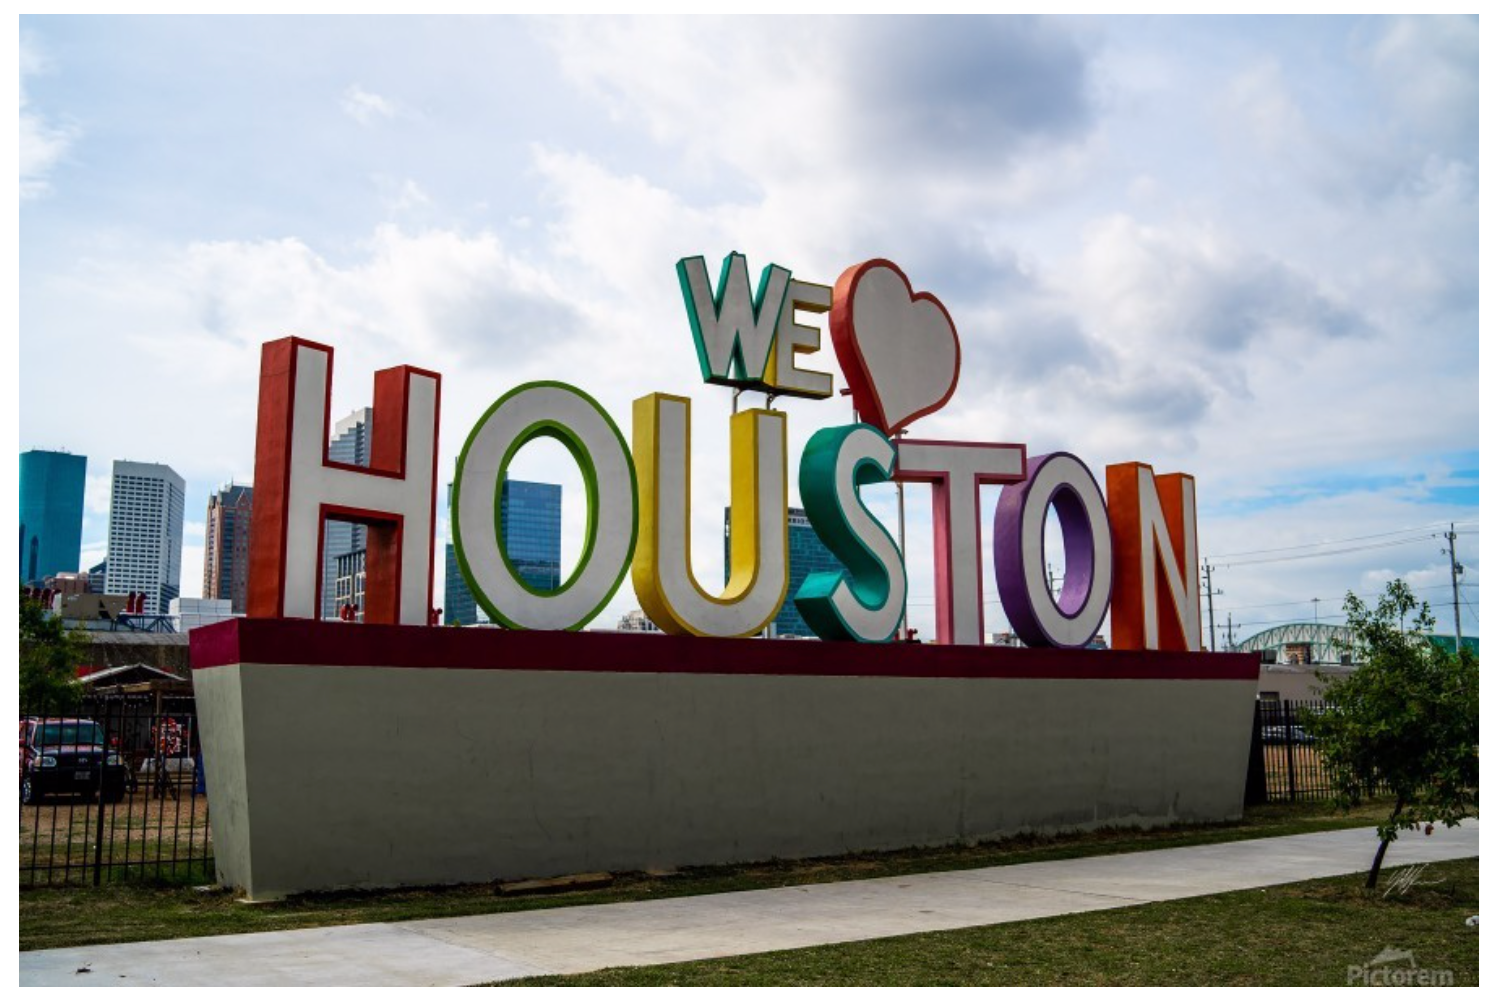 “Iconic Houston” by Jeffrey Chen : We Love Houston